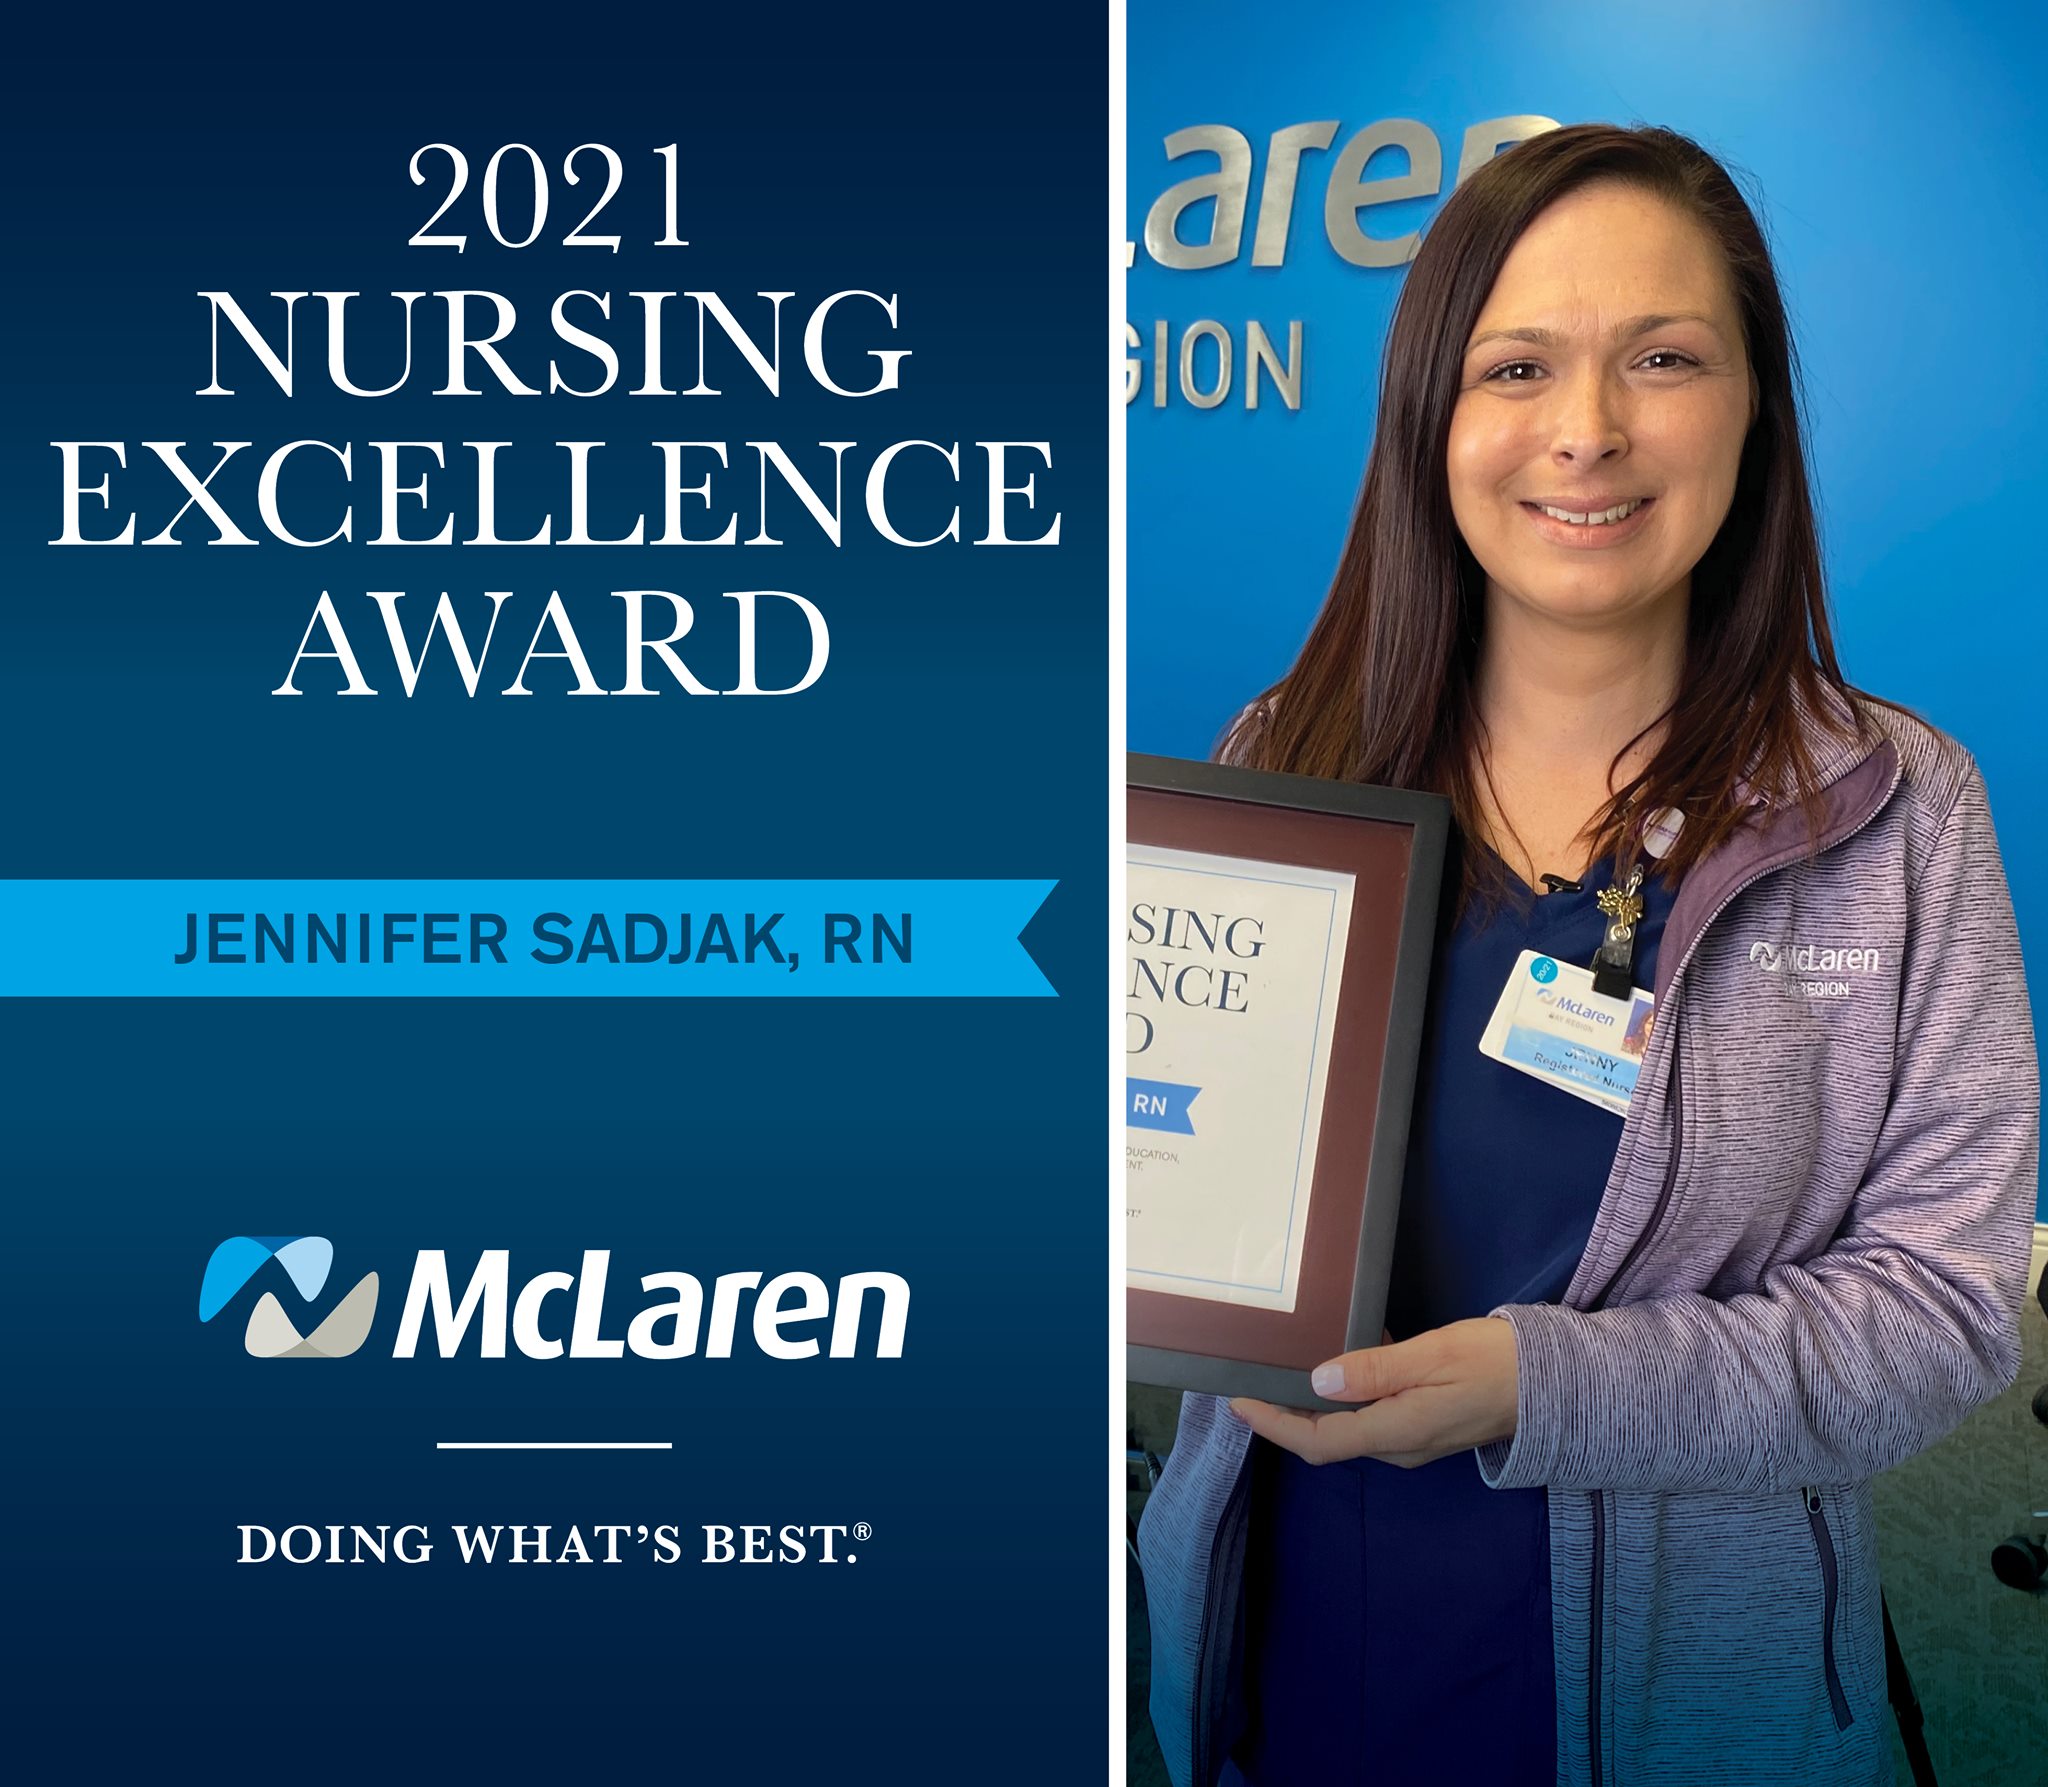 Jennifer Sadjak - 2021 Nursing Excellence Award recipient